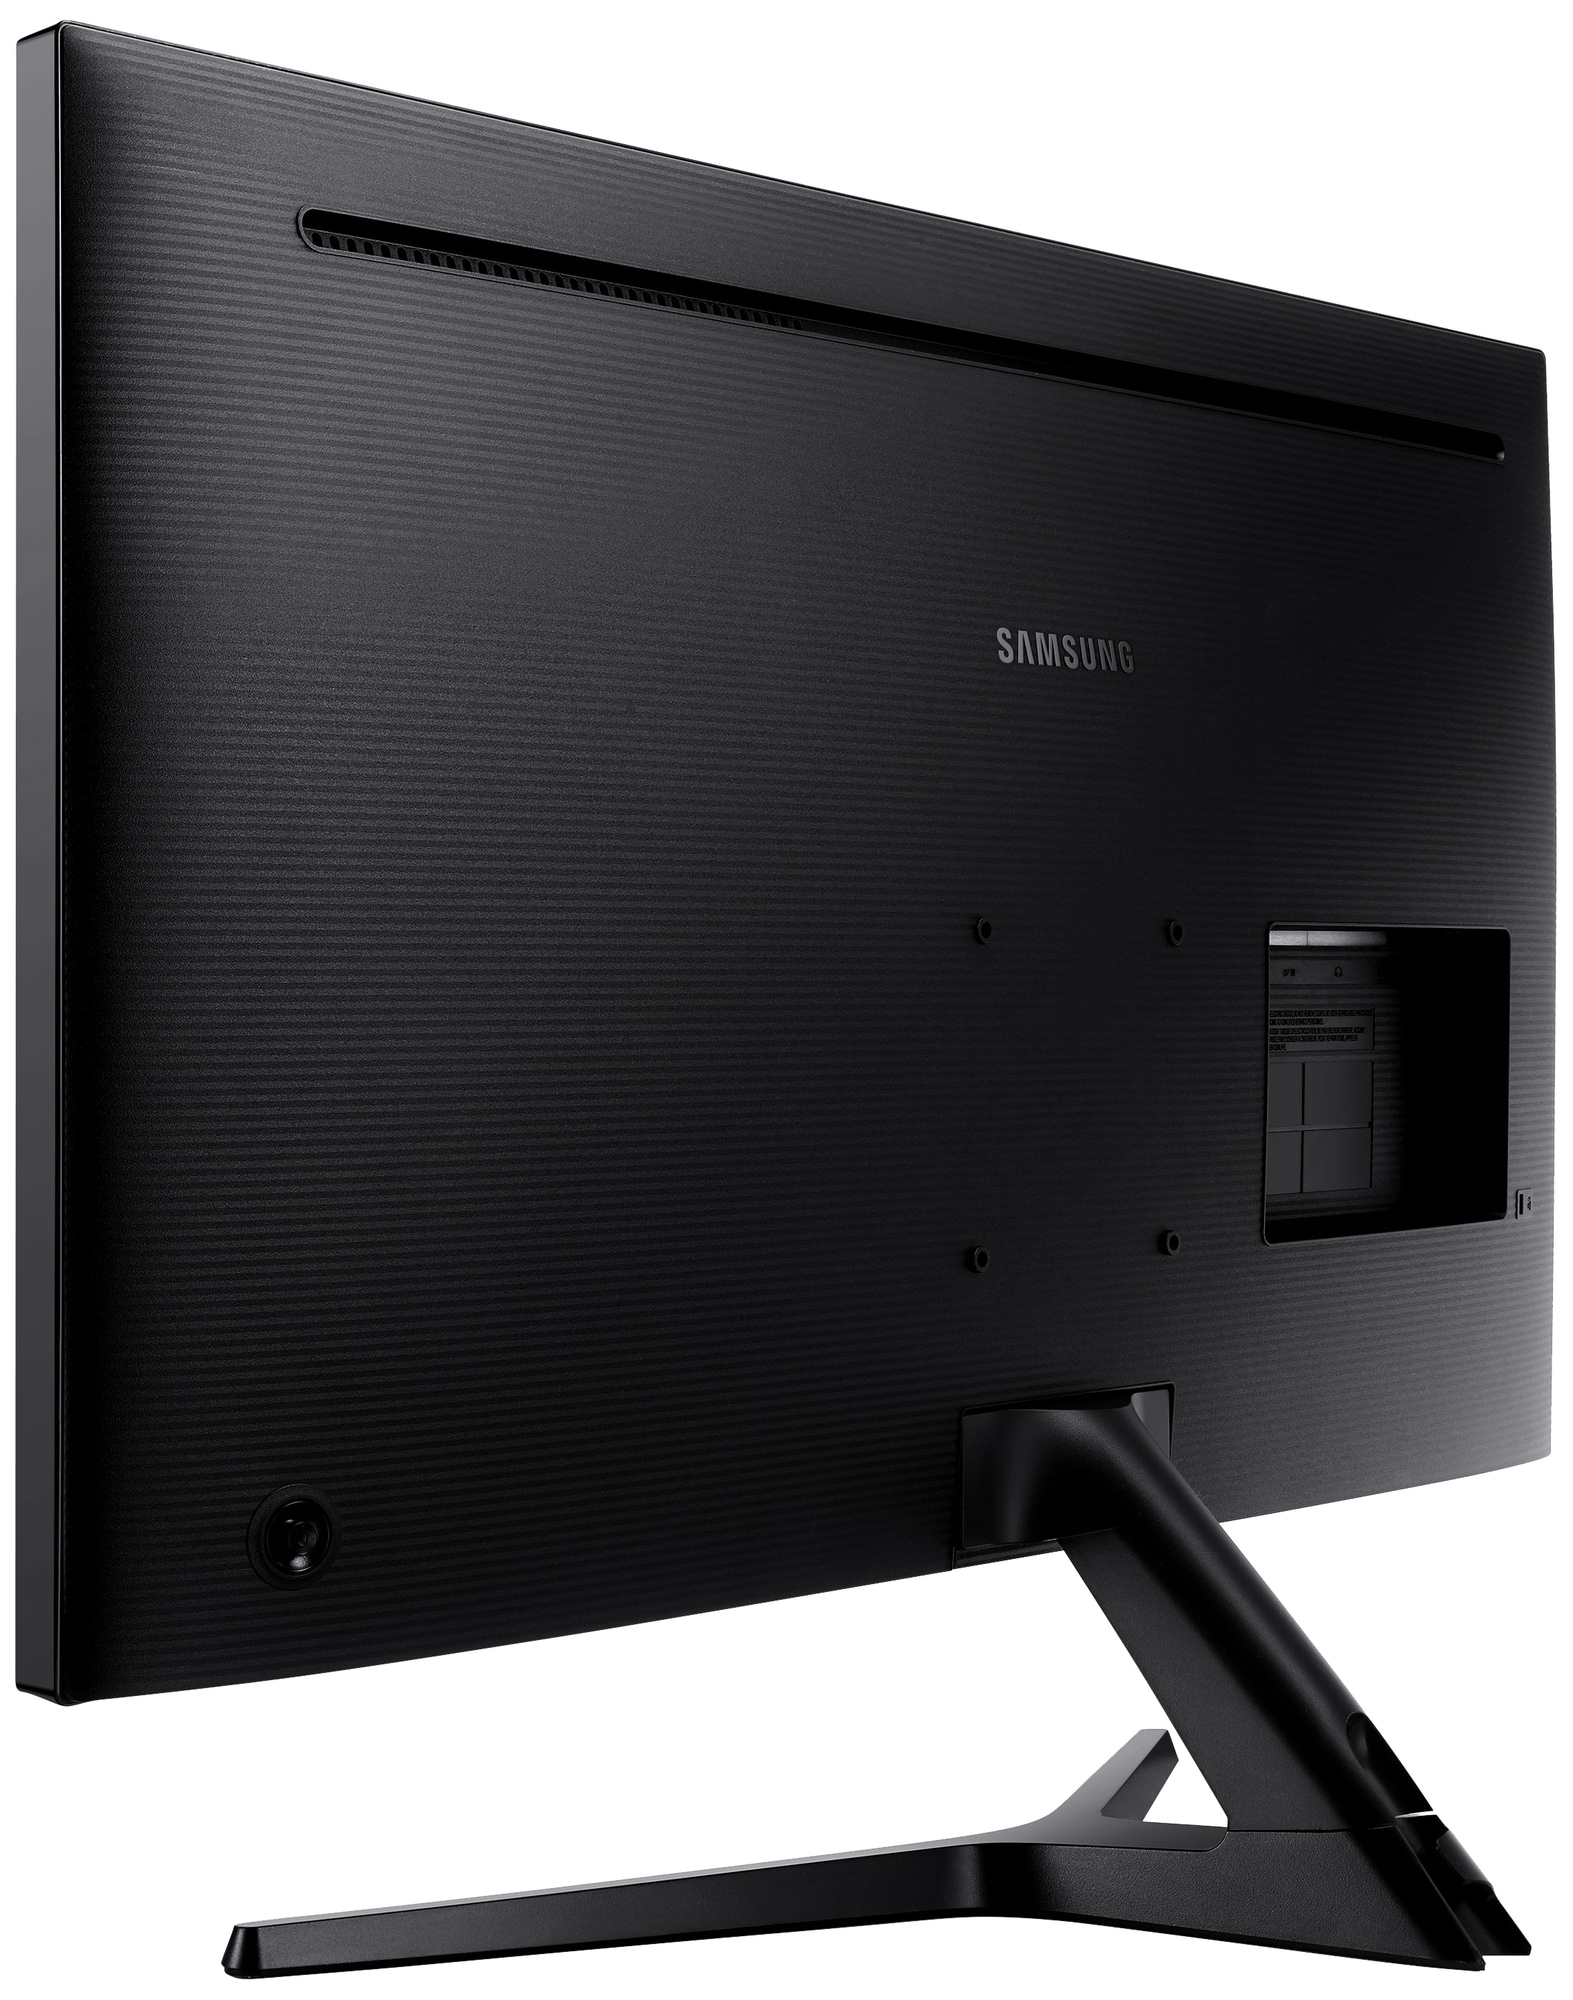 Samsung U32J590U 32" 4K UHD skjerm (sort) - Fotografering - Elkjøp